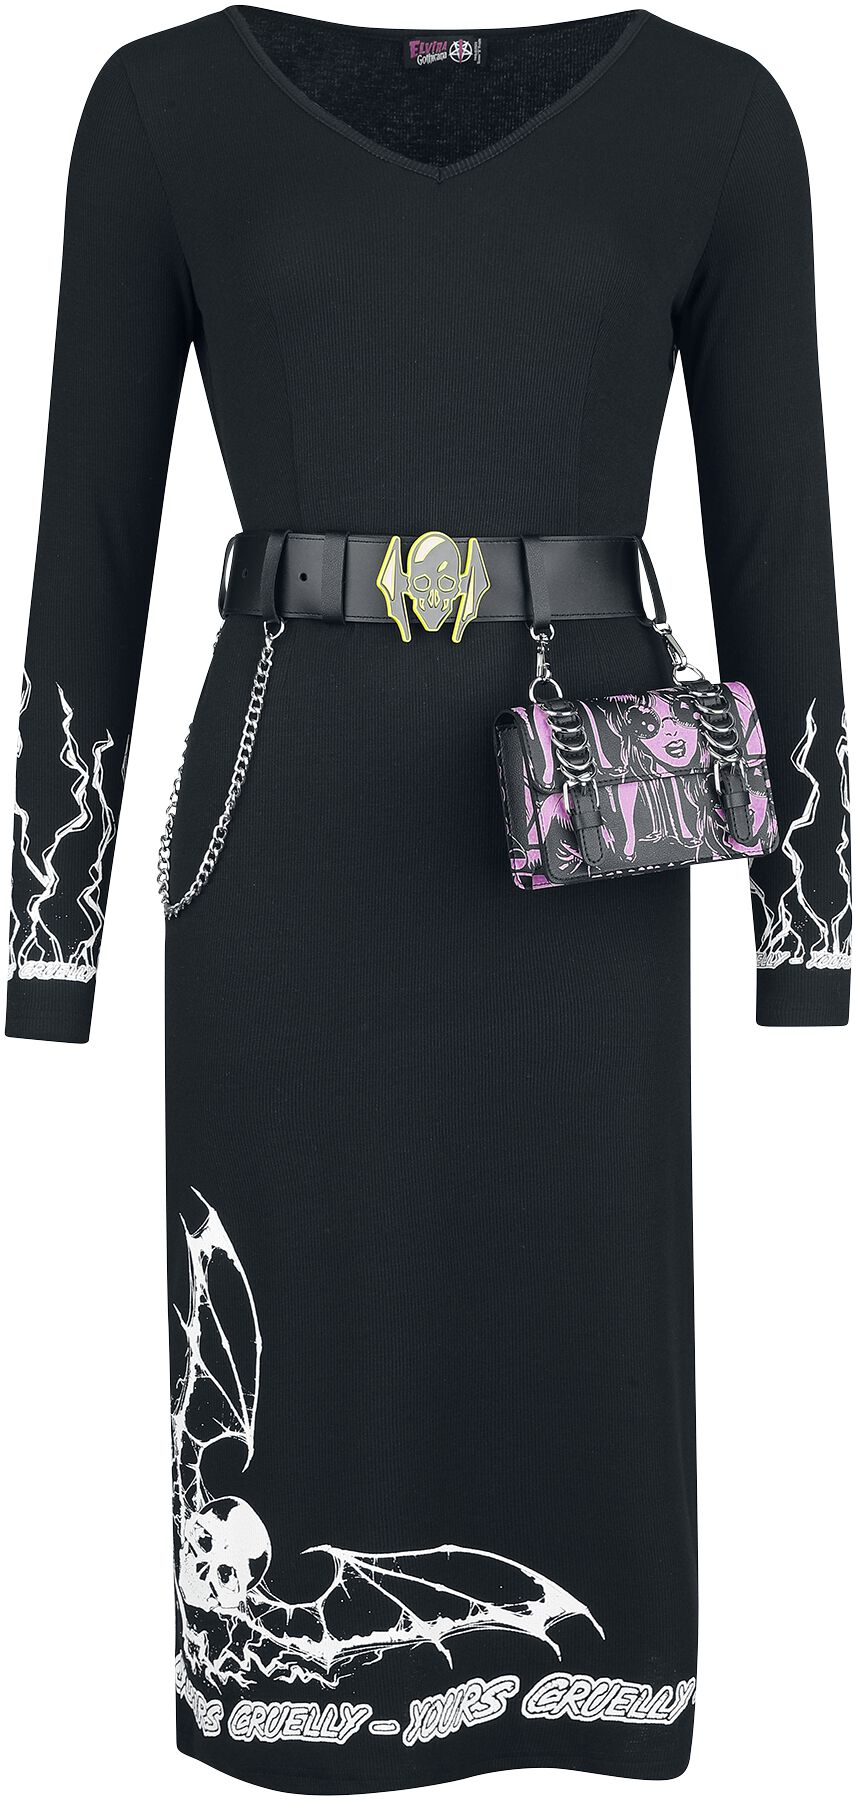 Gothicana by EMP - Gothicana X Elvira Dress with Belt and Bag - Kleid knielang - schwarz - EMP Exklusiv!